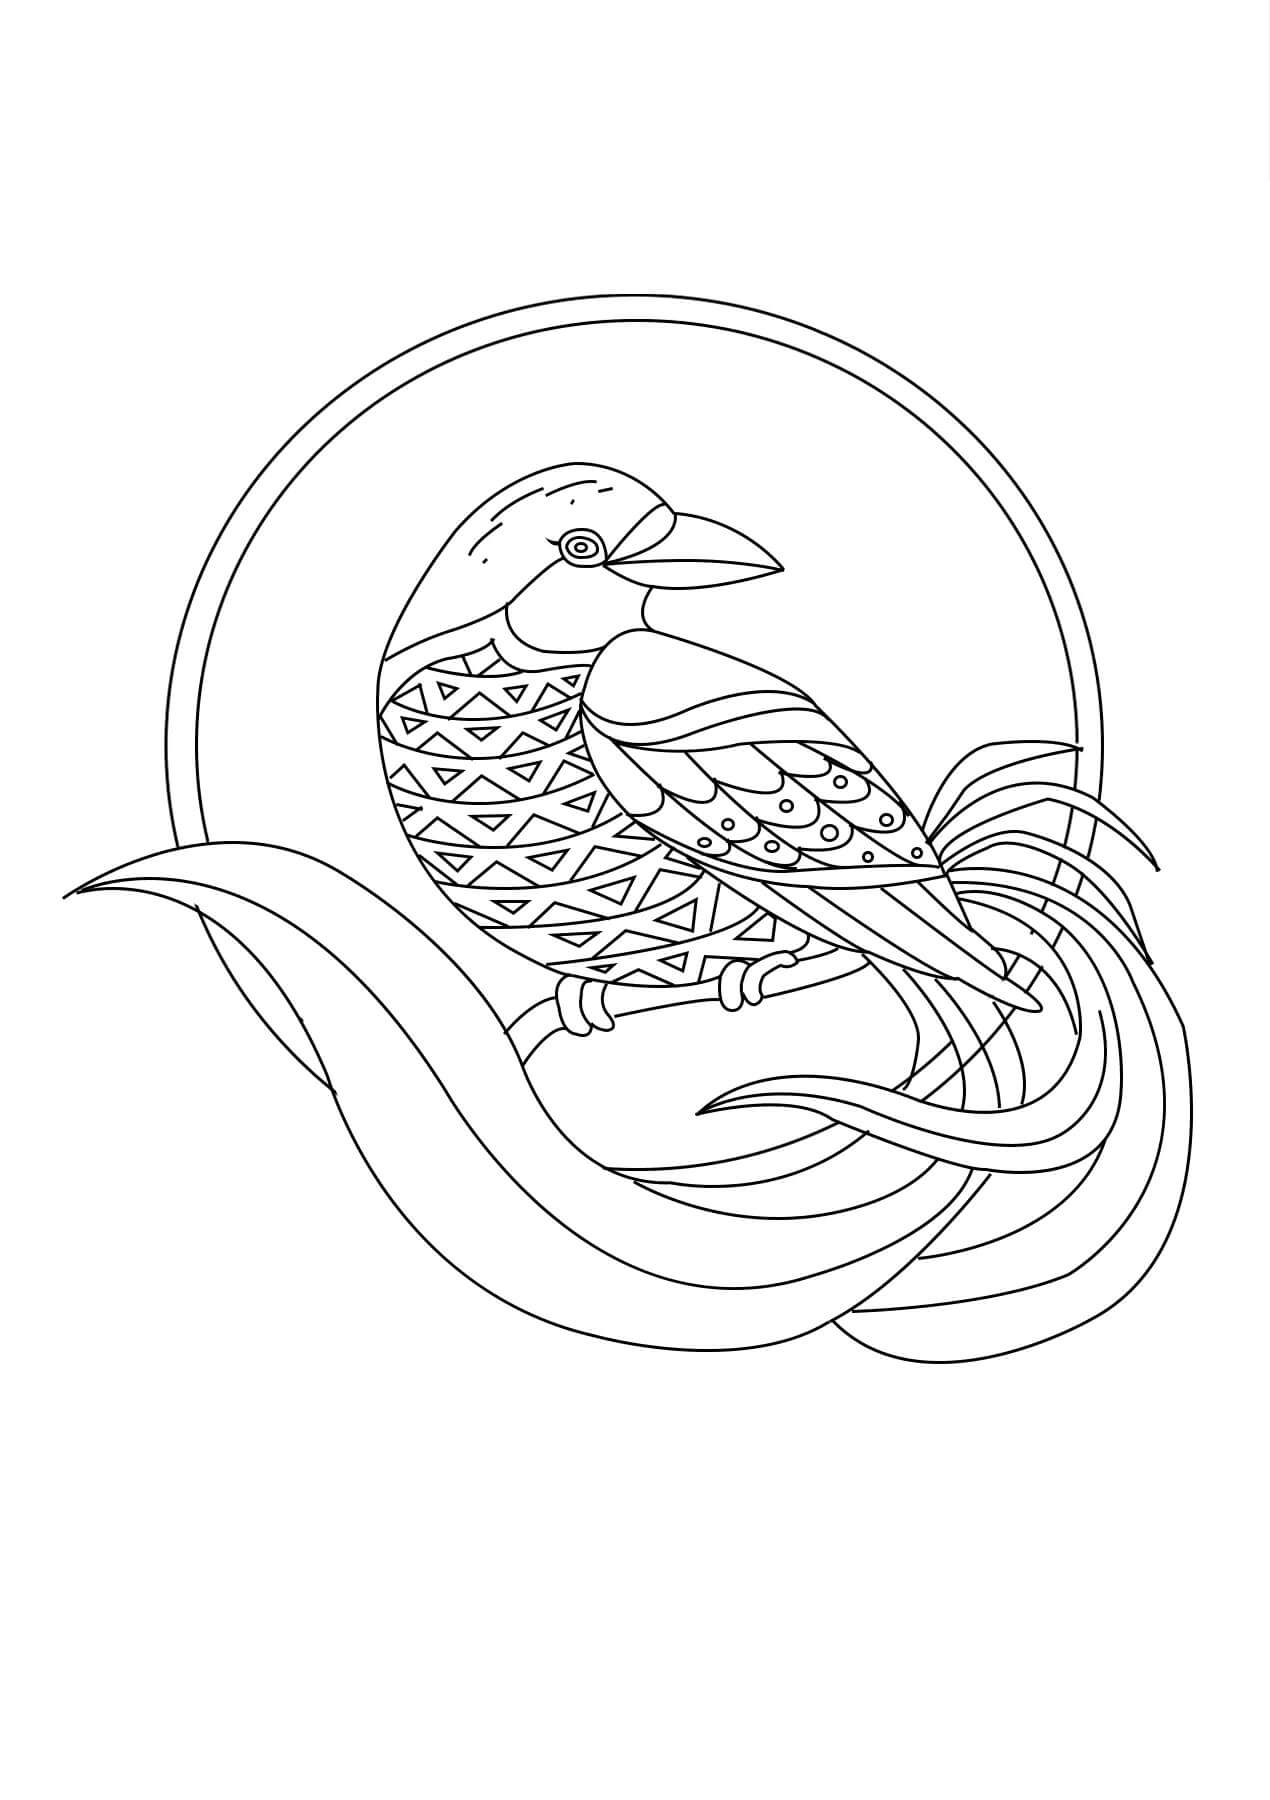 Mandala Bird Coloring Page - Sheet 1 Mandalas